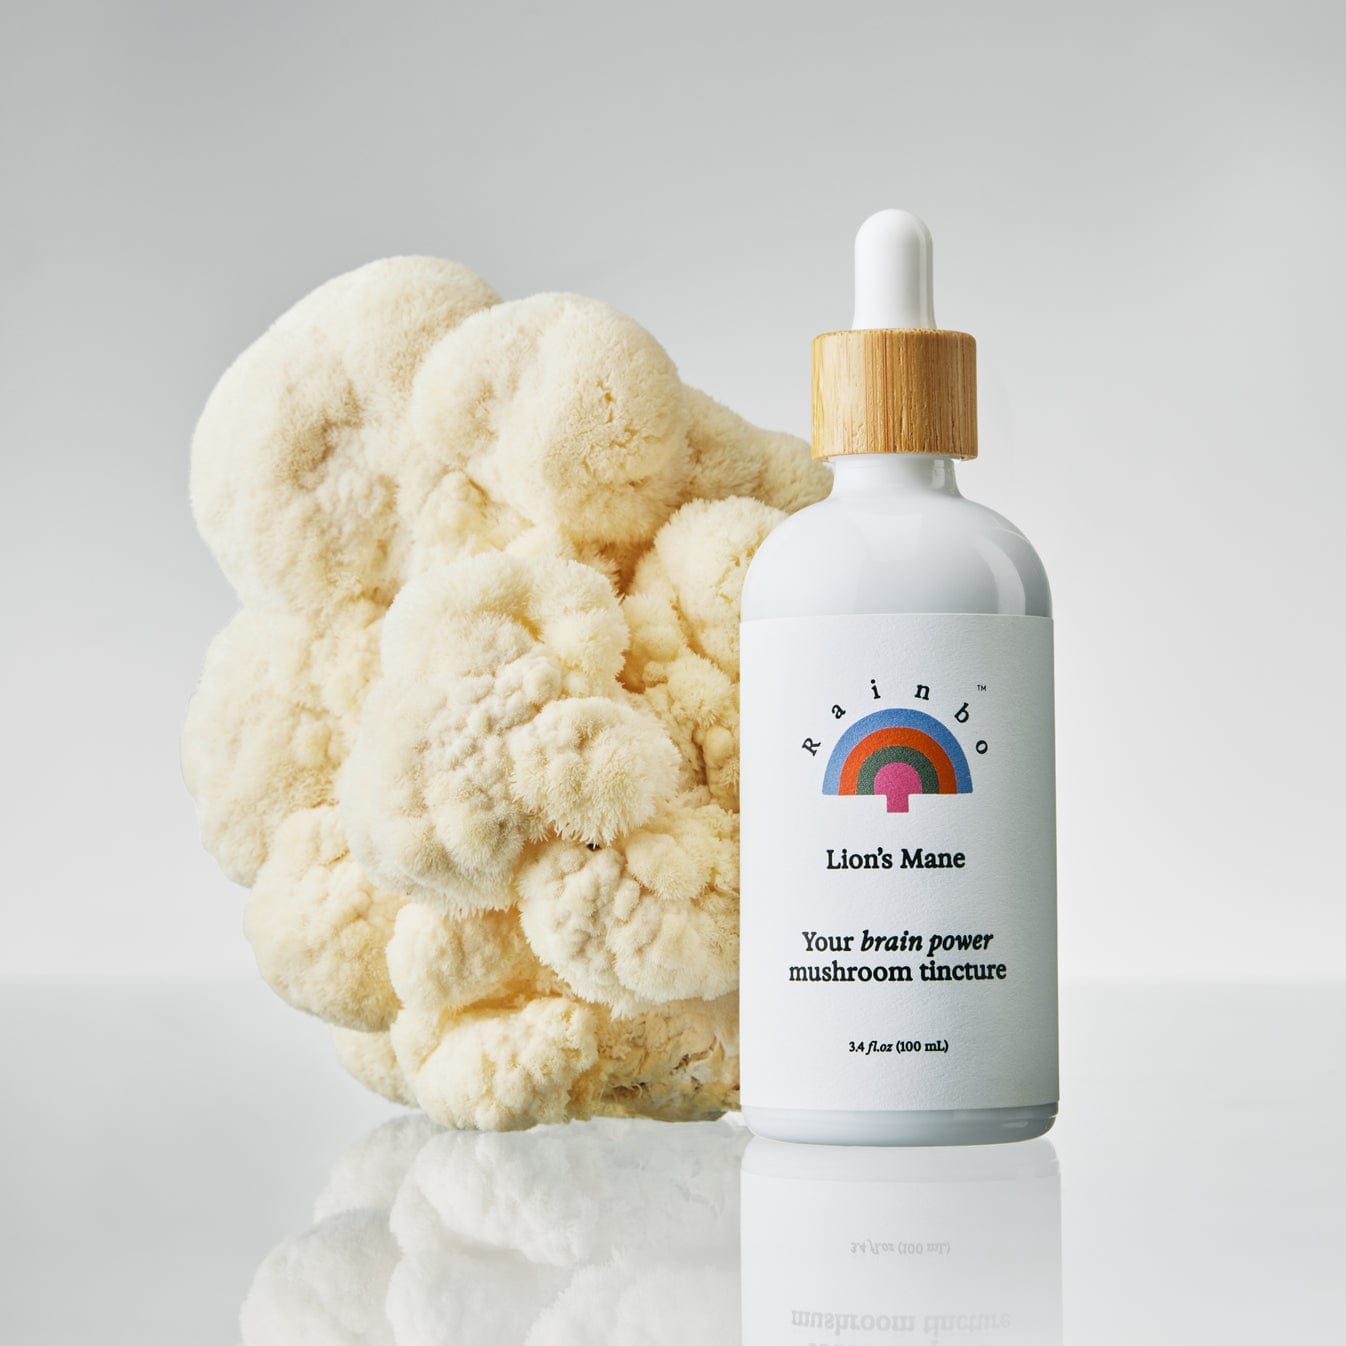 Rainbo wellness tincture Lion's Mane Mushroom Tincture sunja link - canada